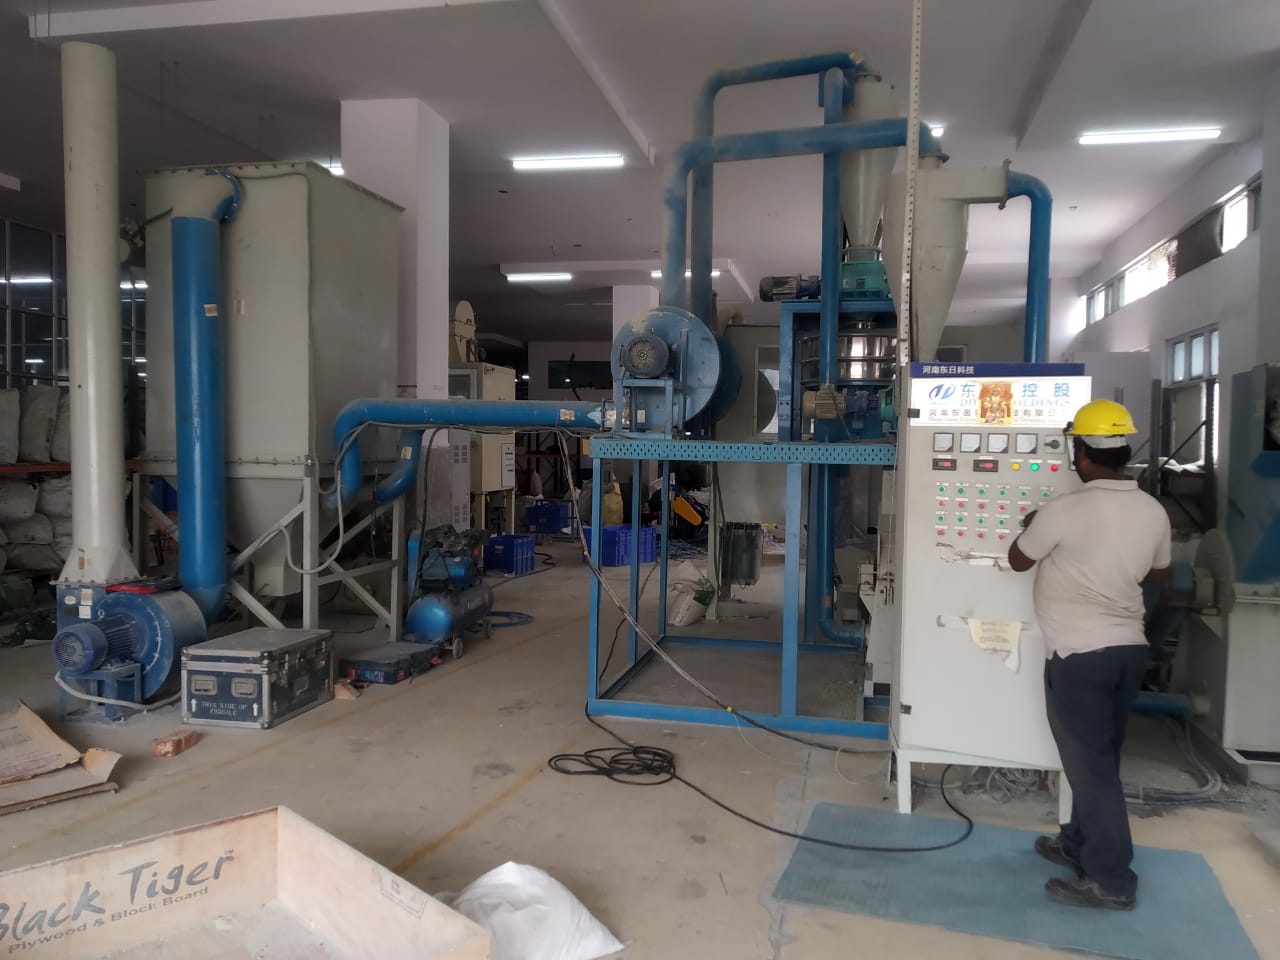 Pabrik Pengelolaan Limbah Deshwal yang membantu mendaur ulang limbah elektronik